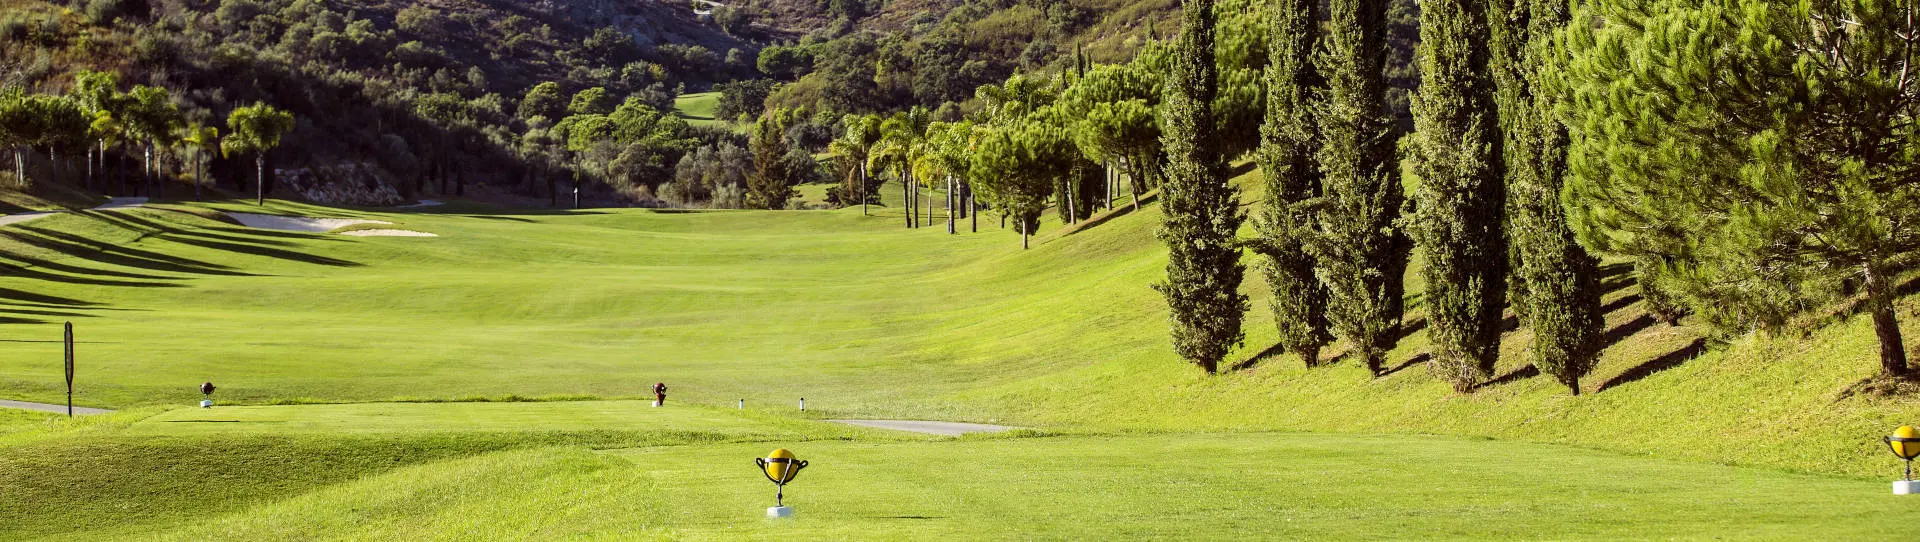 Spain golf holidays - Villa Padierna 2 Rounds Golf Pack - Photo 3